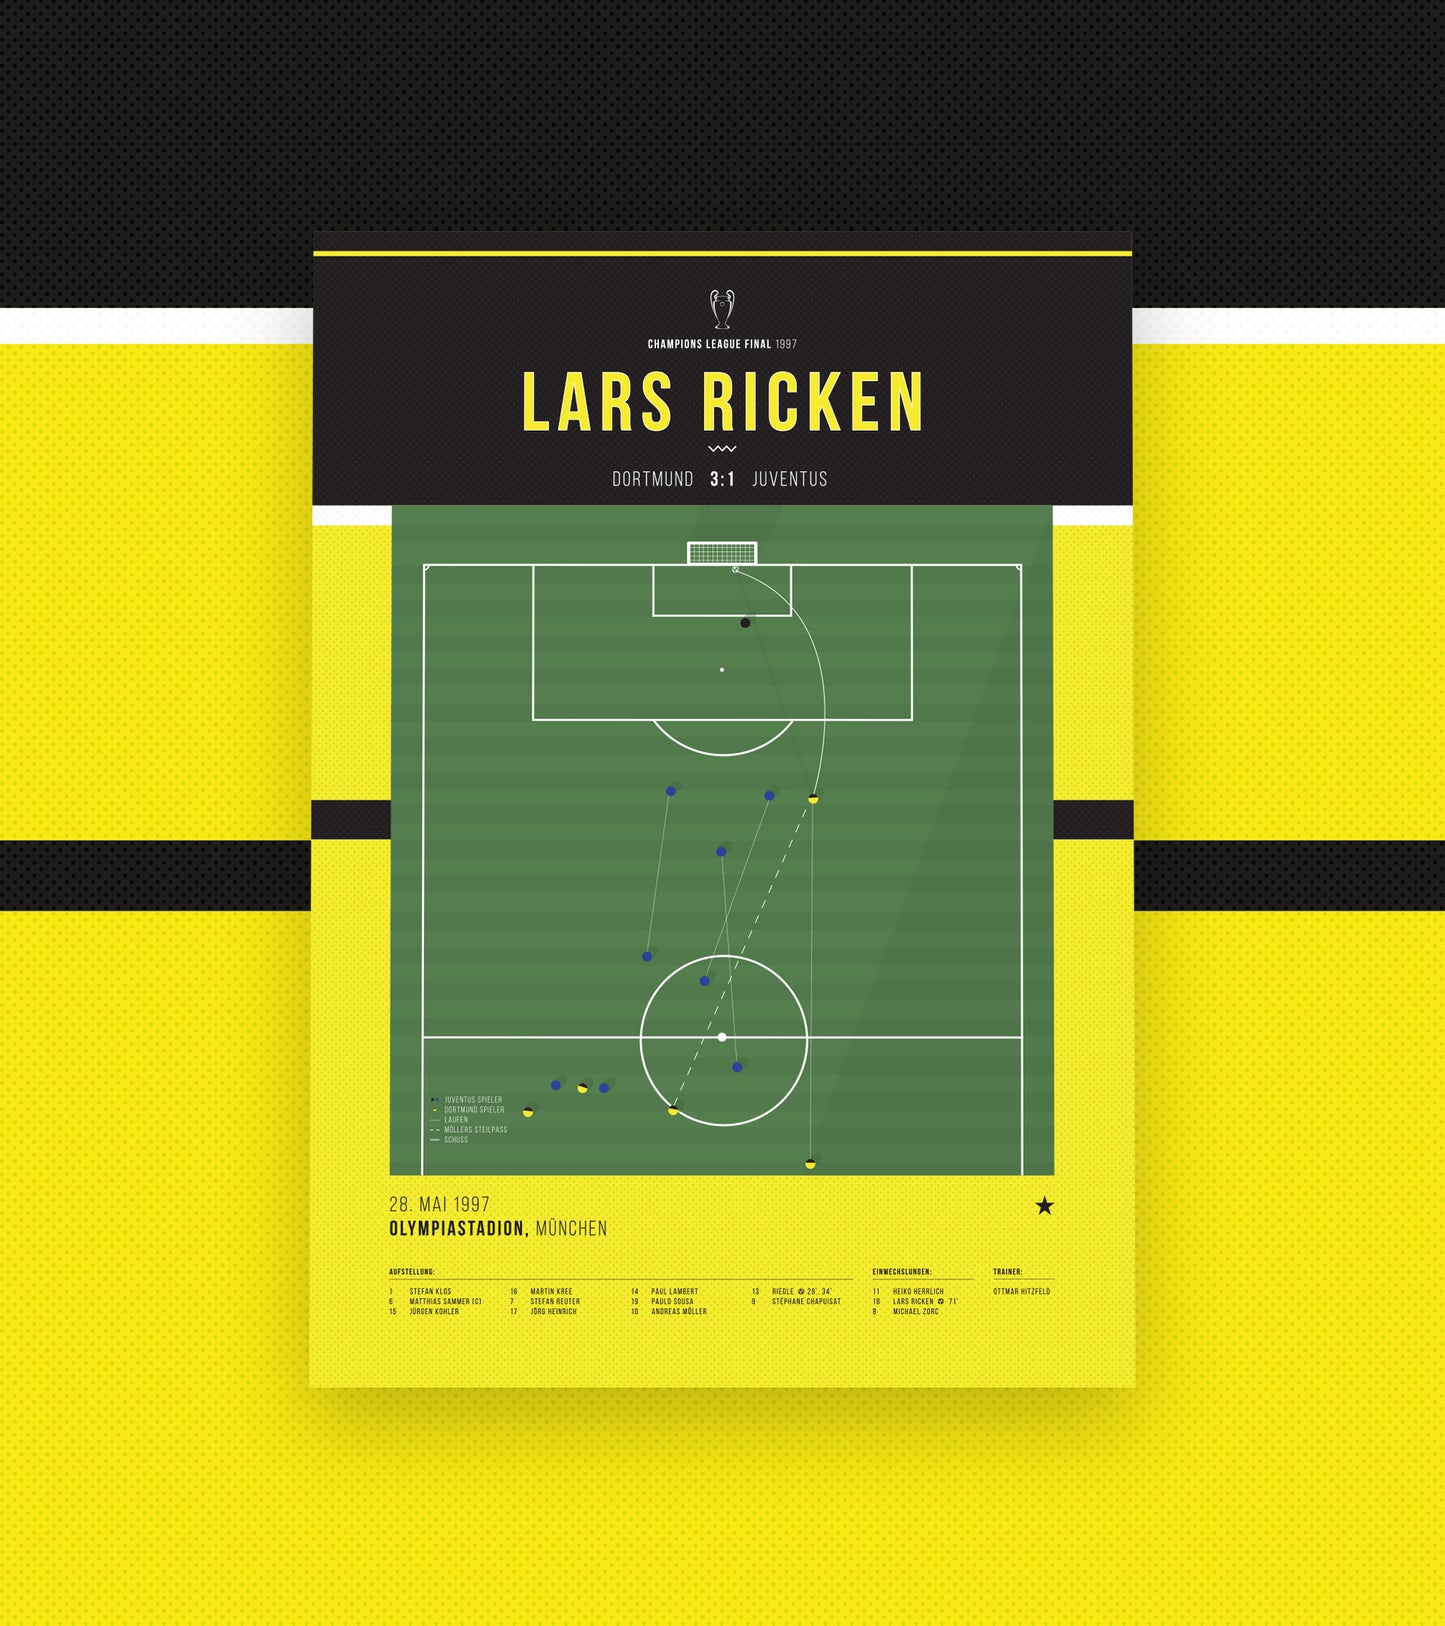 Lars Ricken Champions League Traumtor